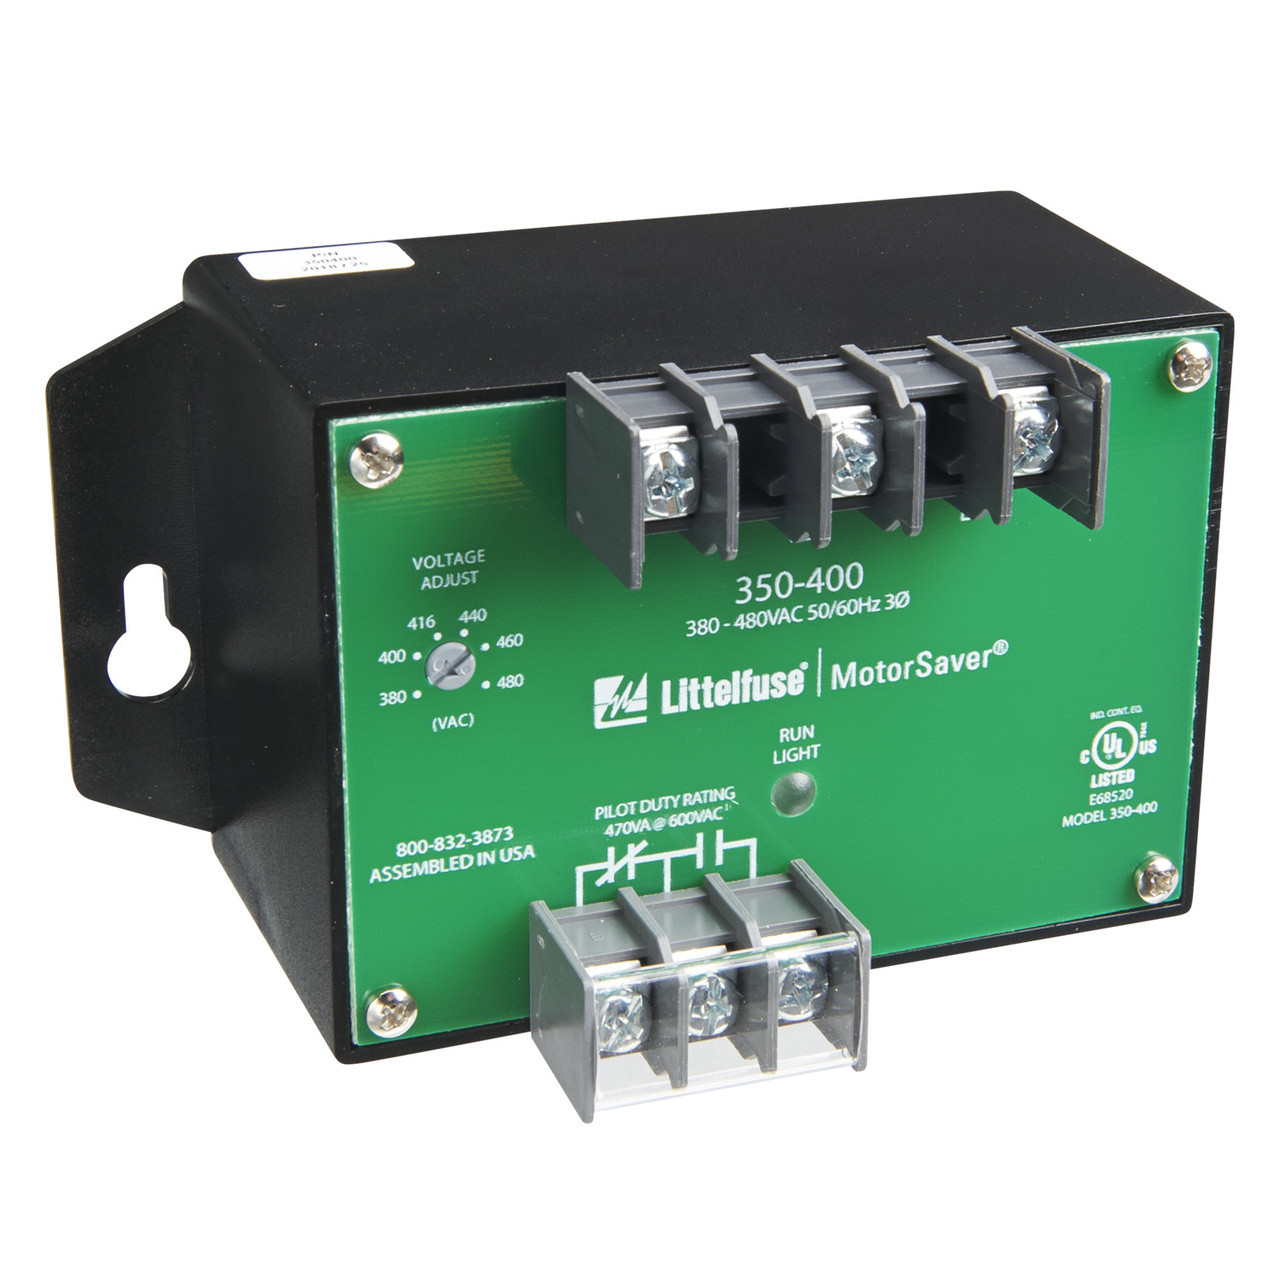 Littelfuse-Symcom 35040029 Voltage Monitor Relays